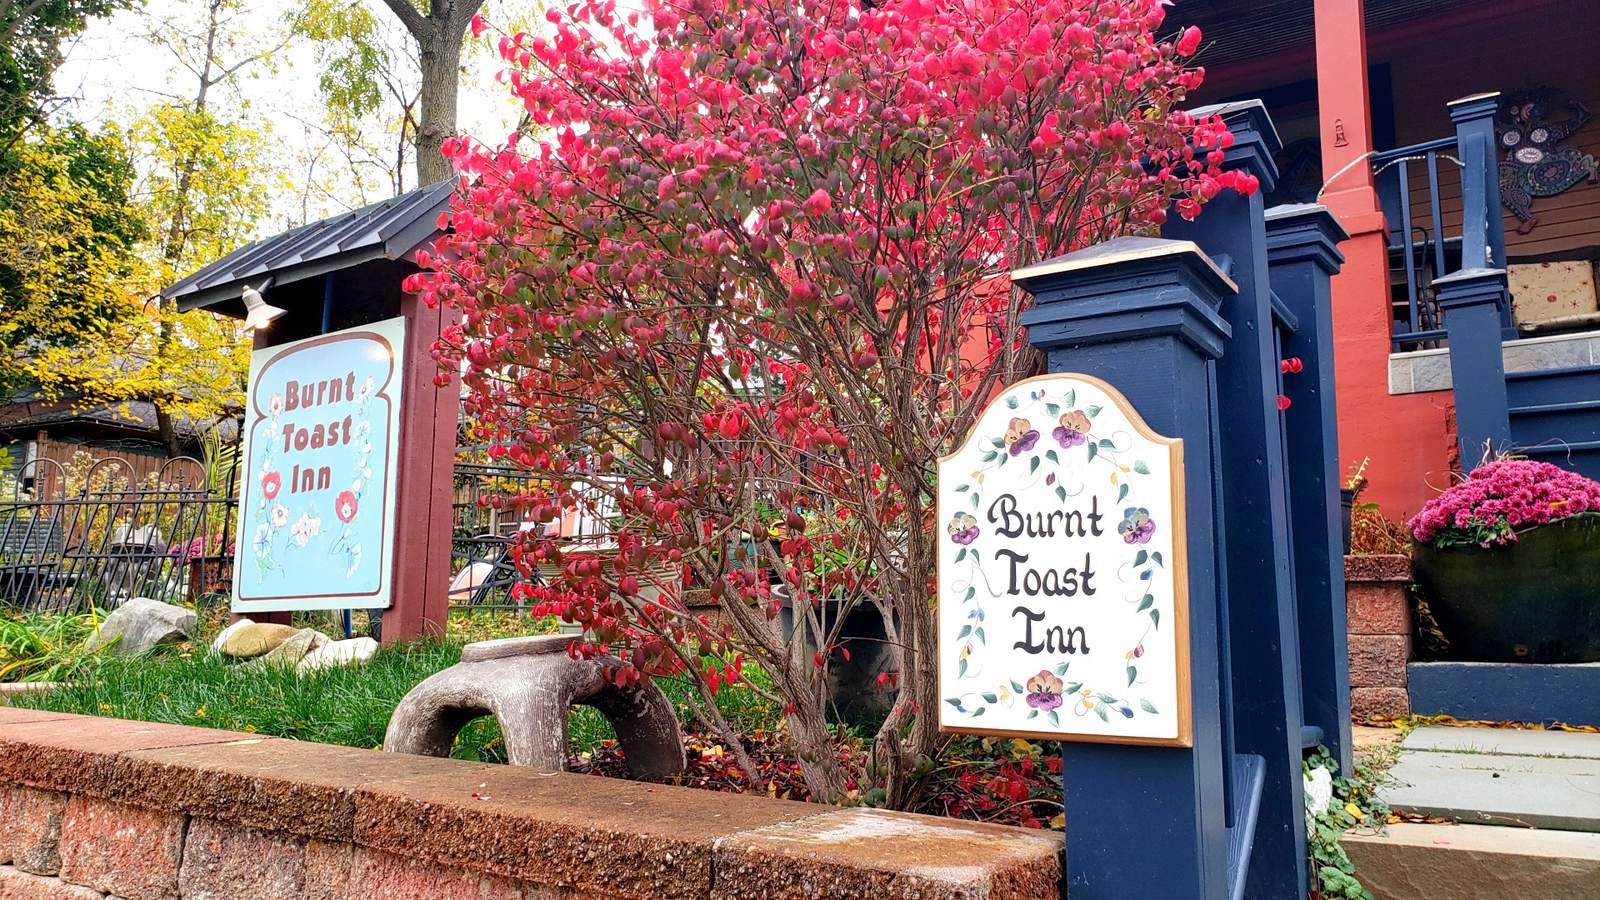 Small Biz Saturday: Ann Arbor’s Burnt Toast Inn sees dramatic drop in visitors in 2020